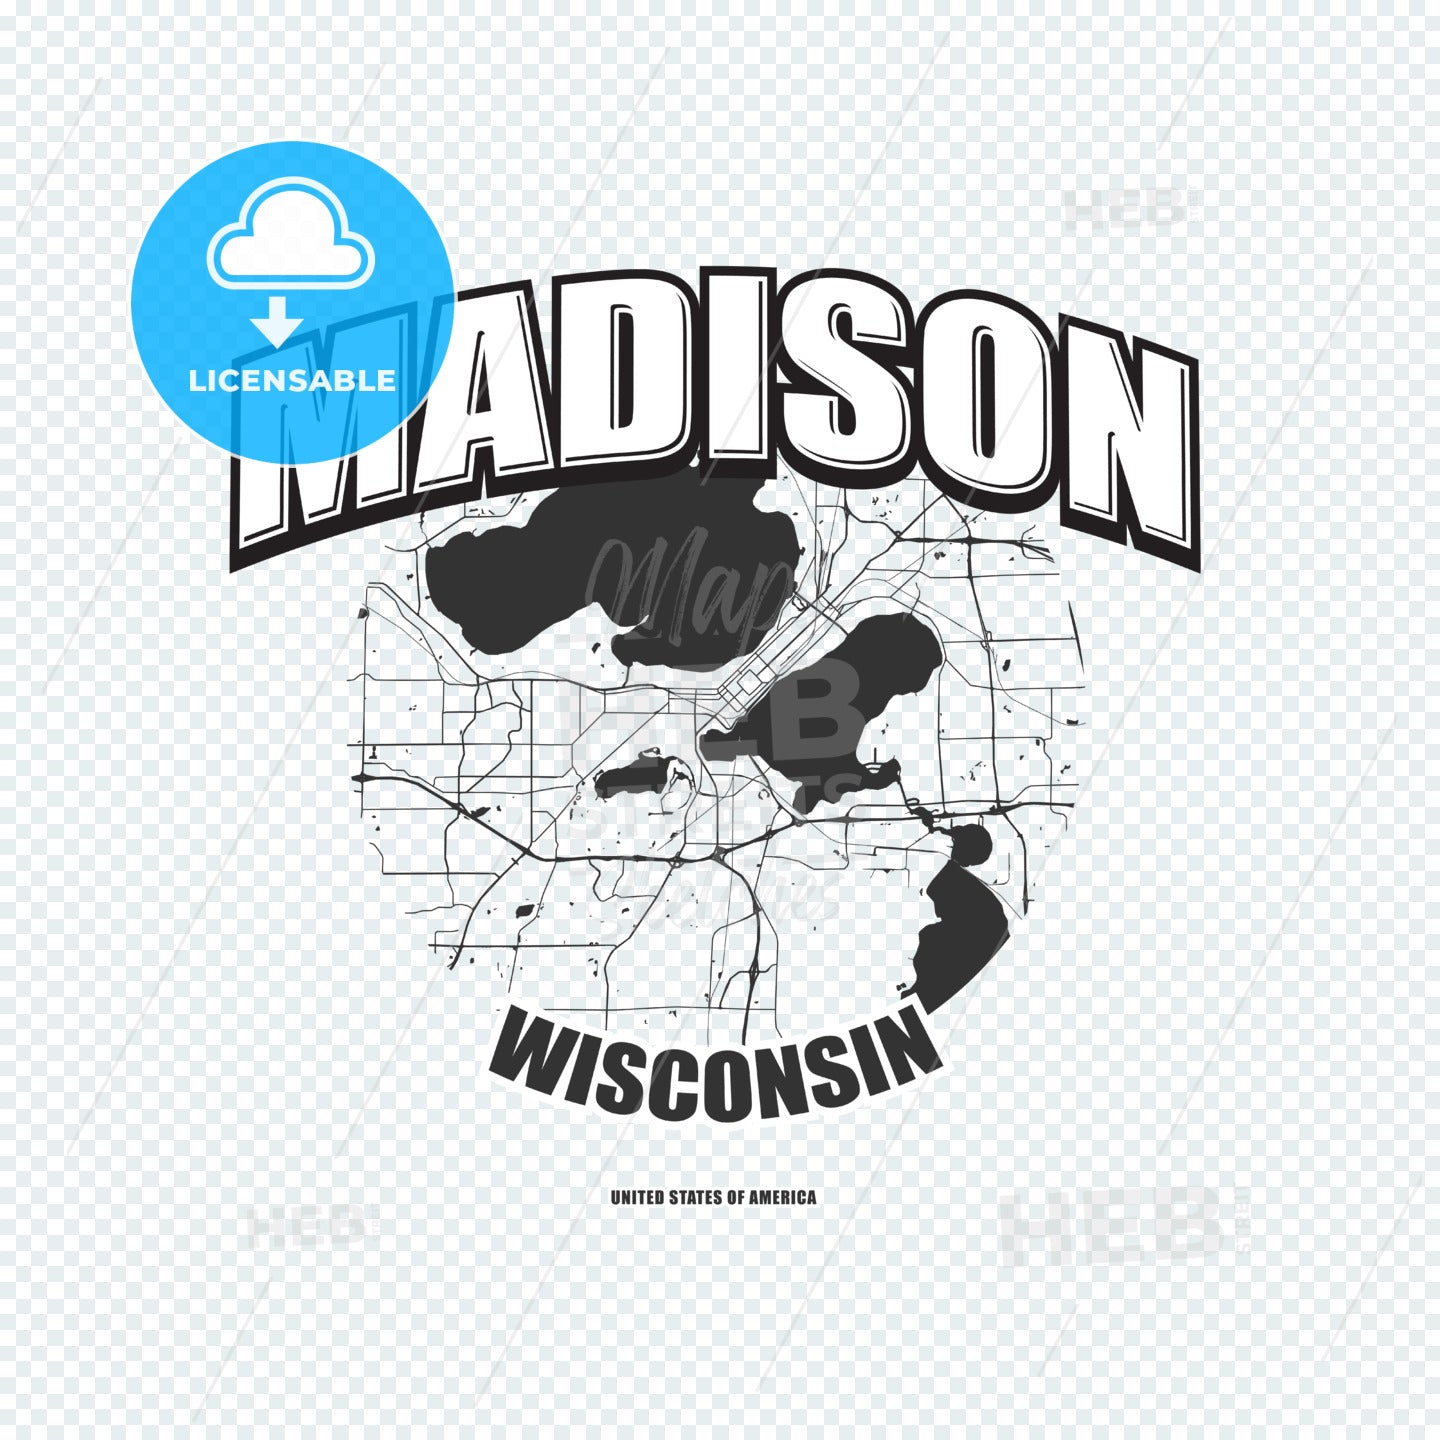 Madison, Wisconsin, logo artwork – instant download